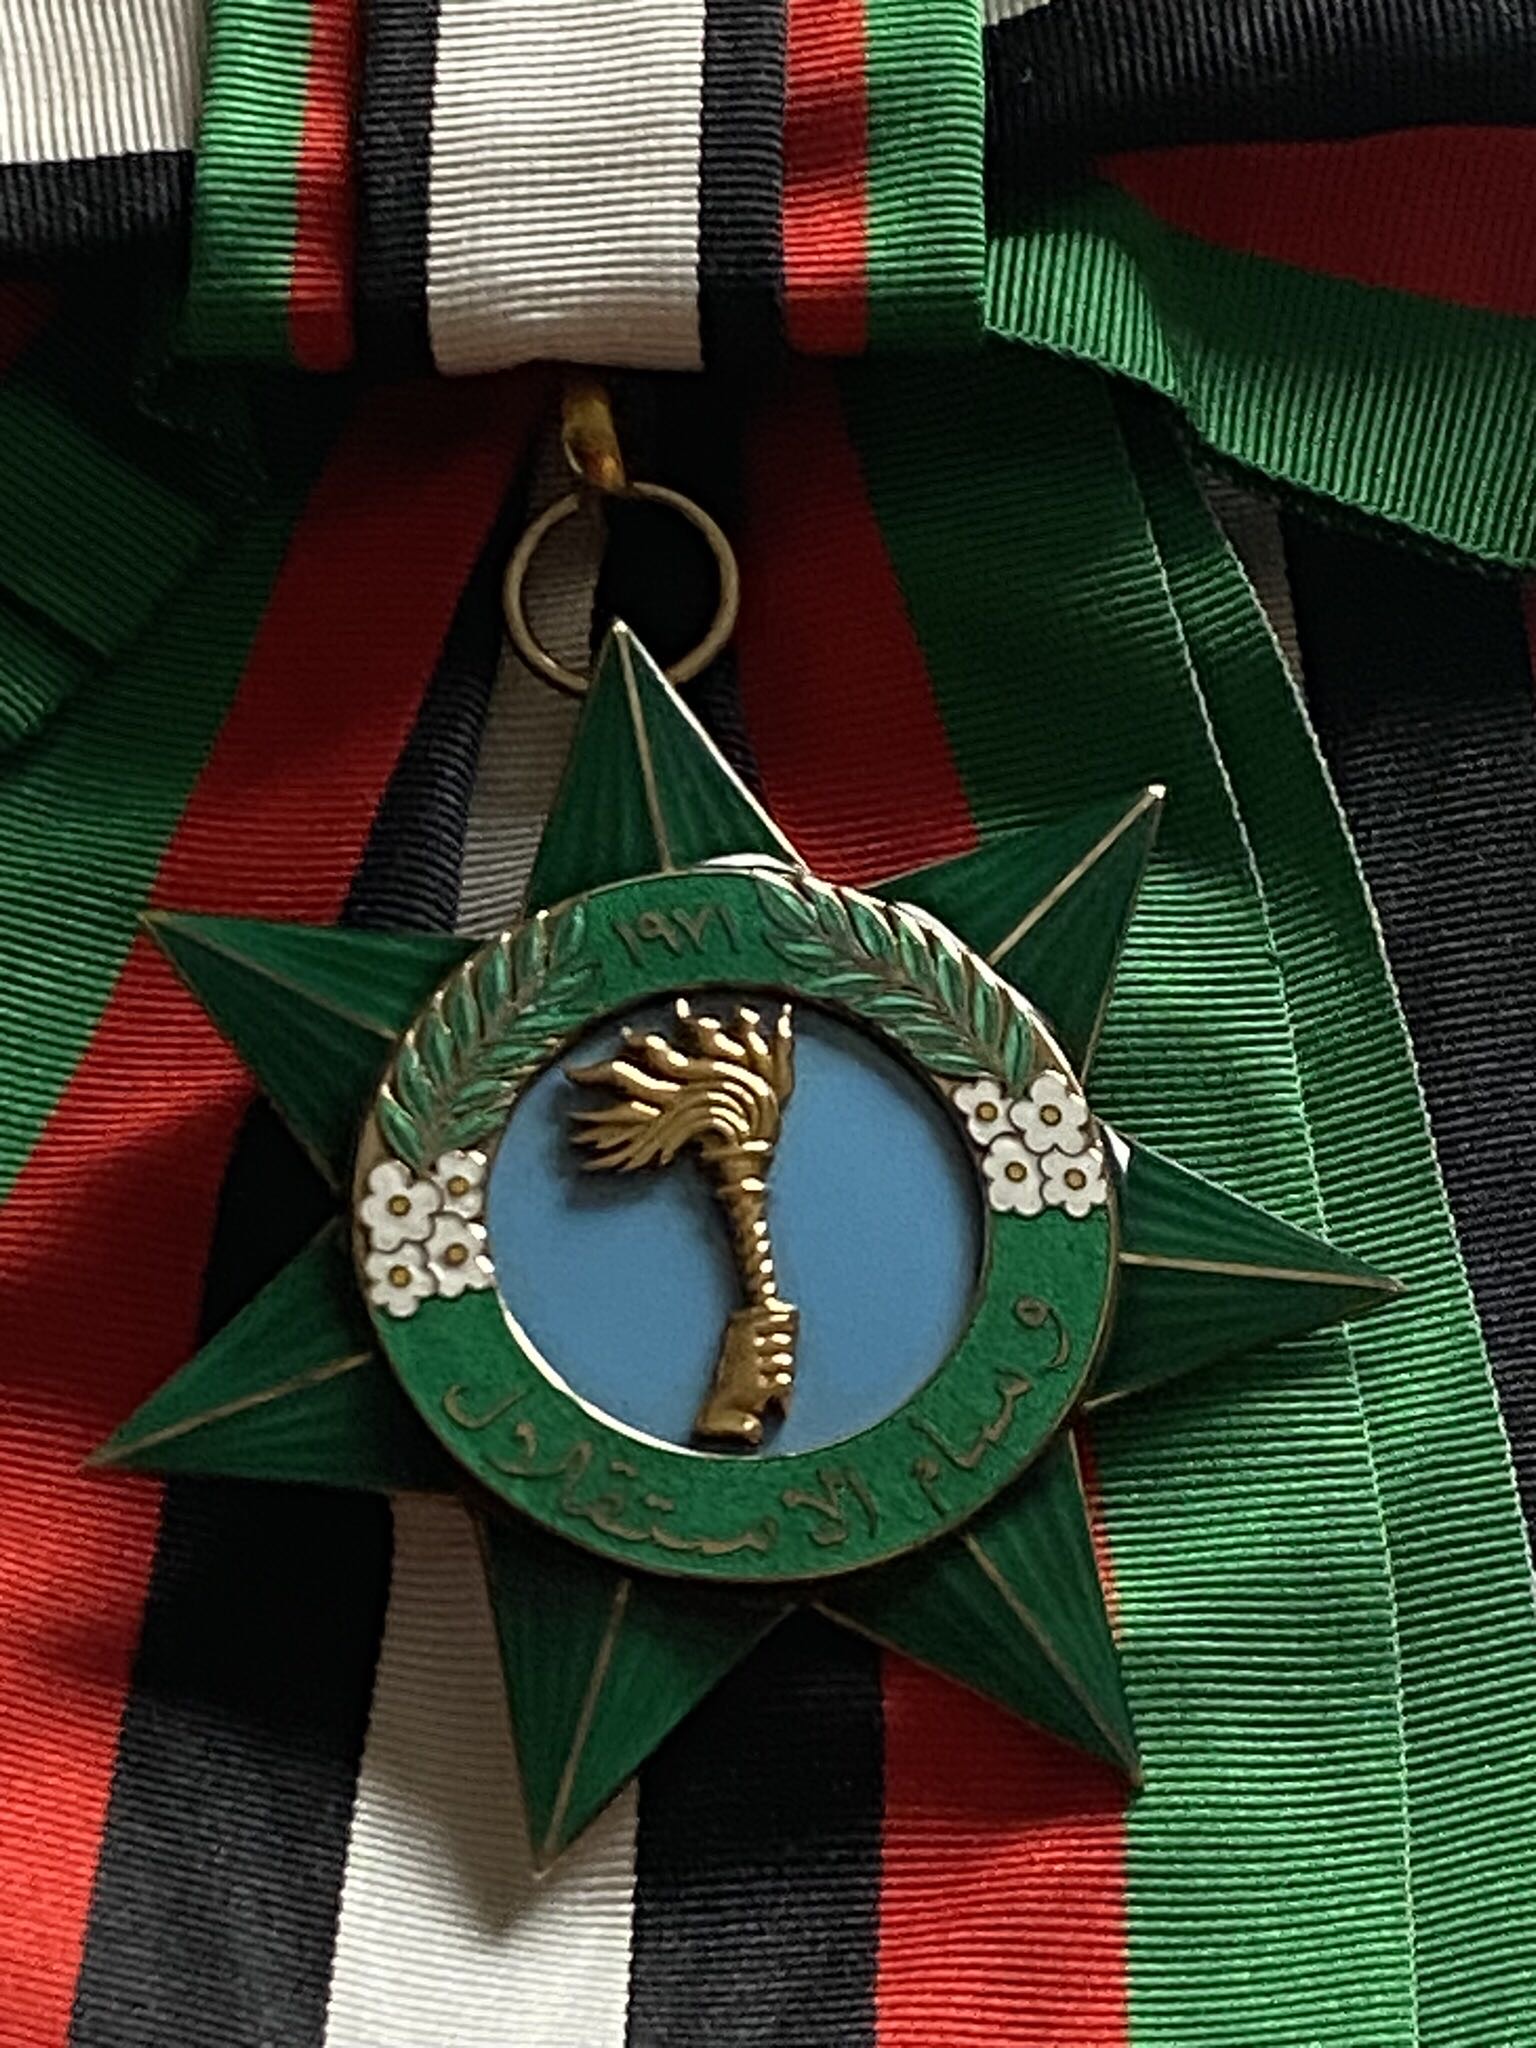 1971 United Arab Emirates UAE Dubai Order of Independence 1st Class Grand Cross Medal Badge